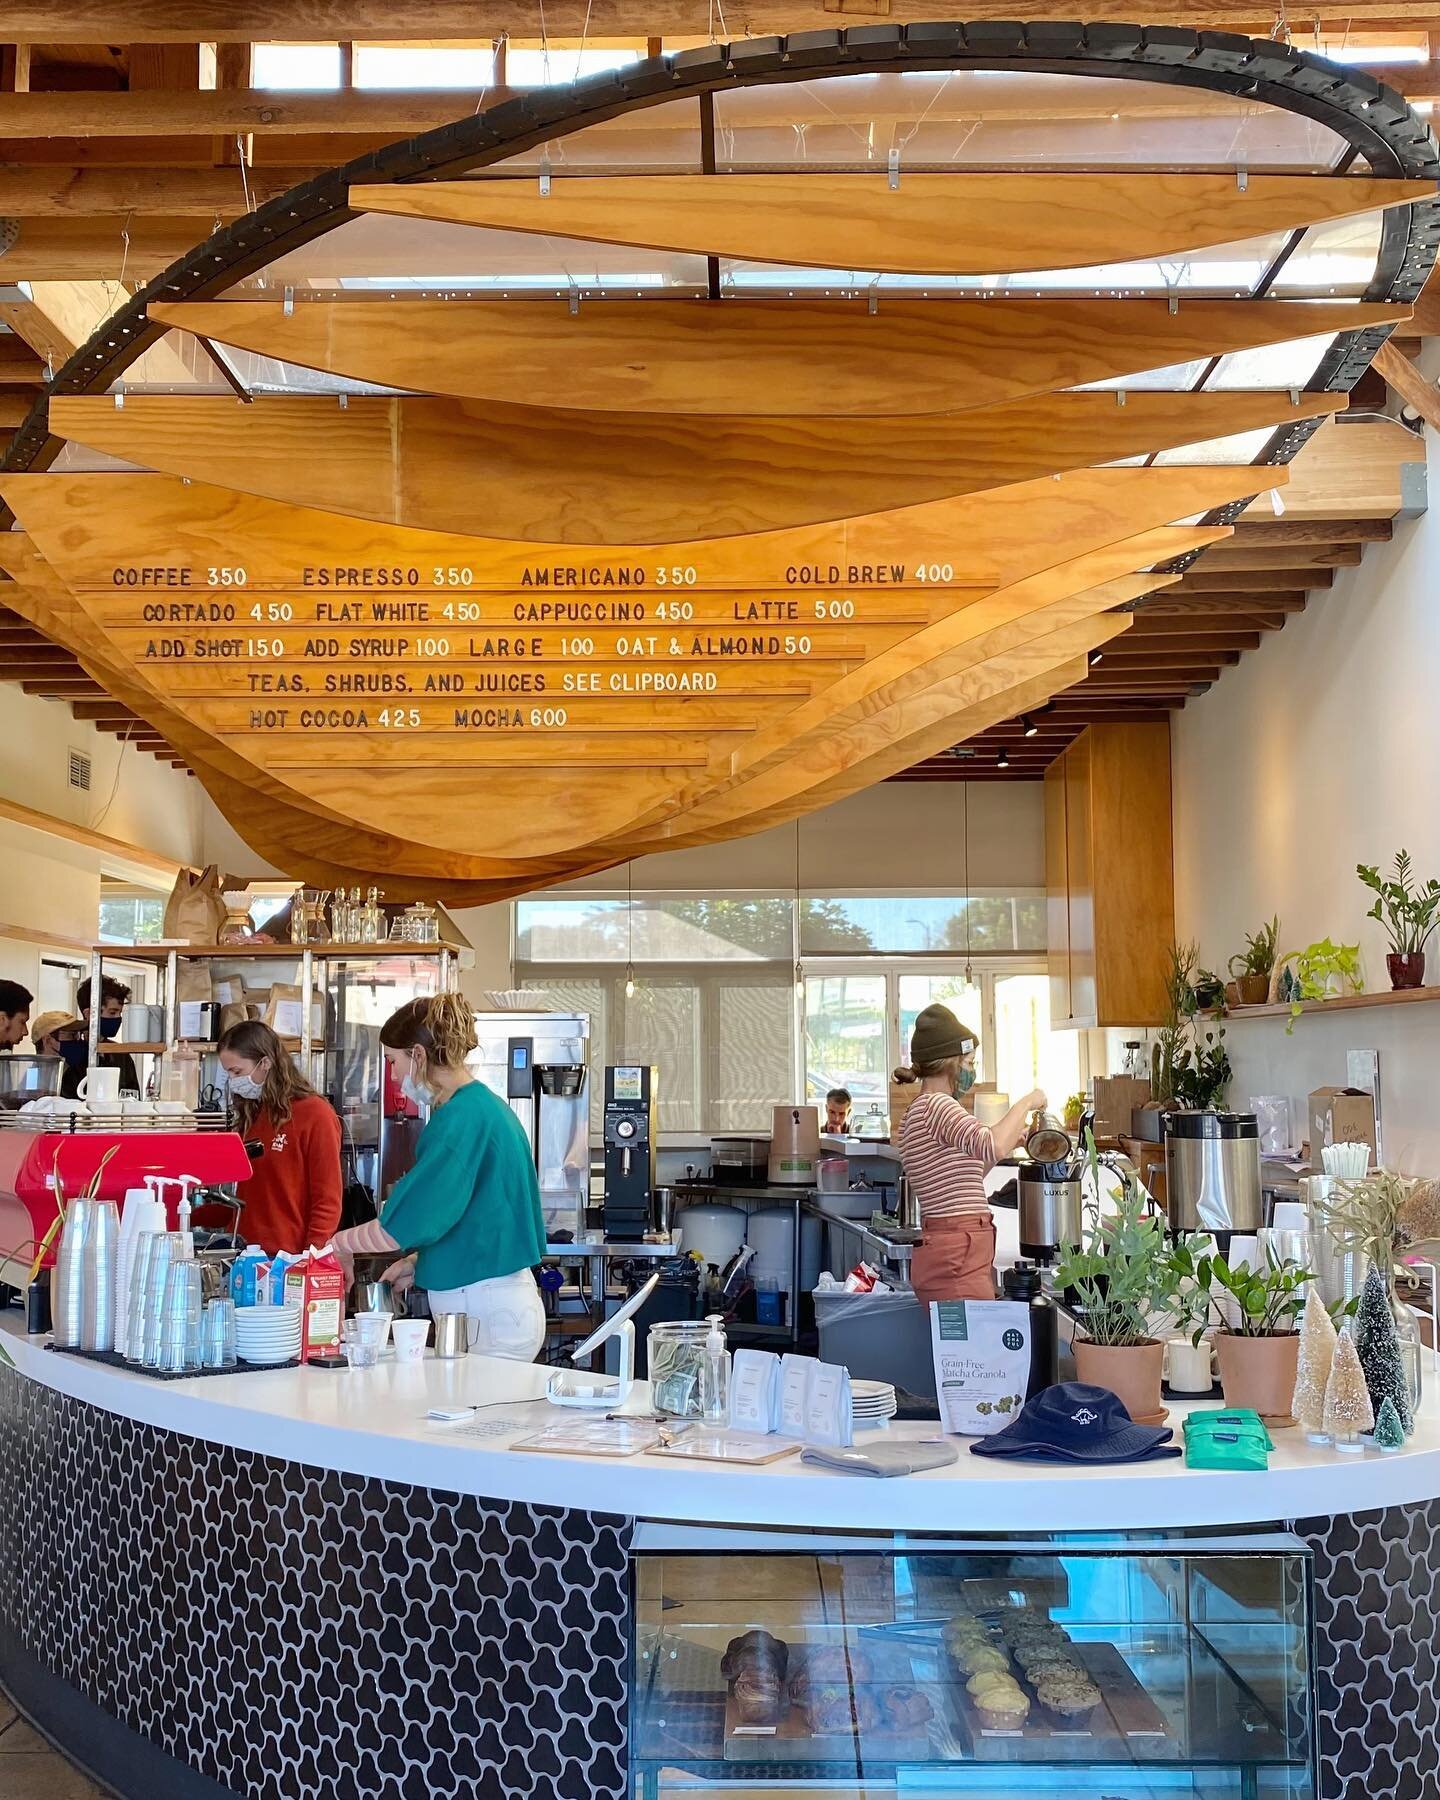 4334 W Sunset Blvd, Los Angeles, CA // #coffeeshopinteriors

#coffeeshop #coffee #design #onthetable #justgoshoot #cafe #interiors #coffeeshopvibes #coffeeaddict #dailycortado #espresso #photooftheday #picoftheday #liveauthentic #manmakecoffee #coffe